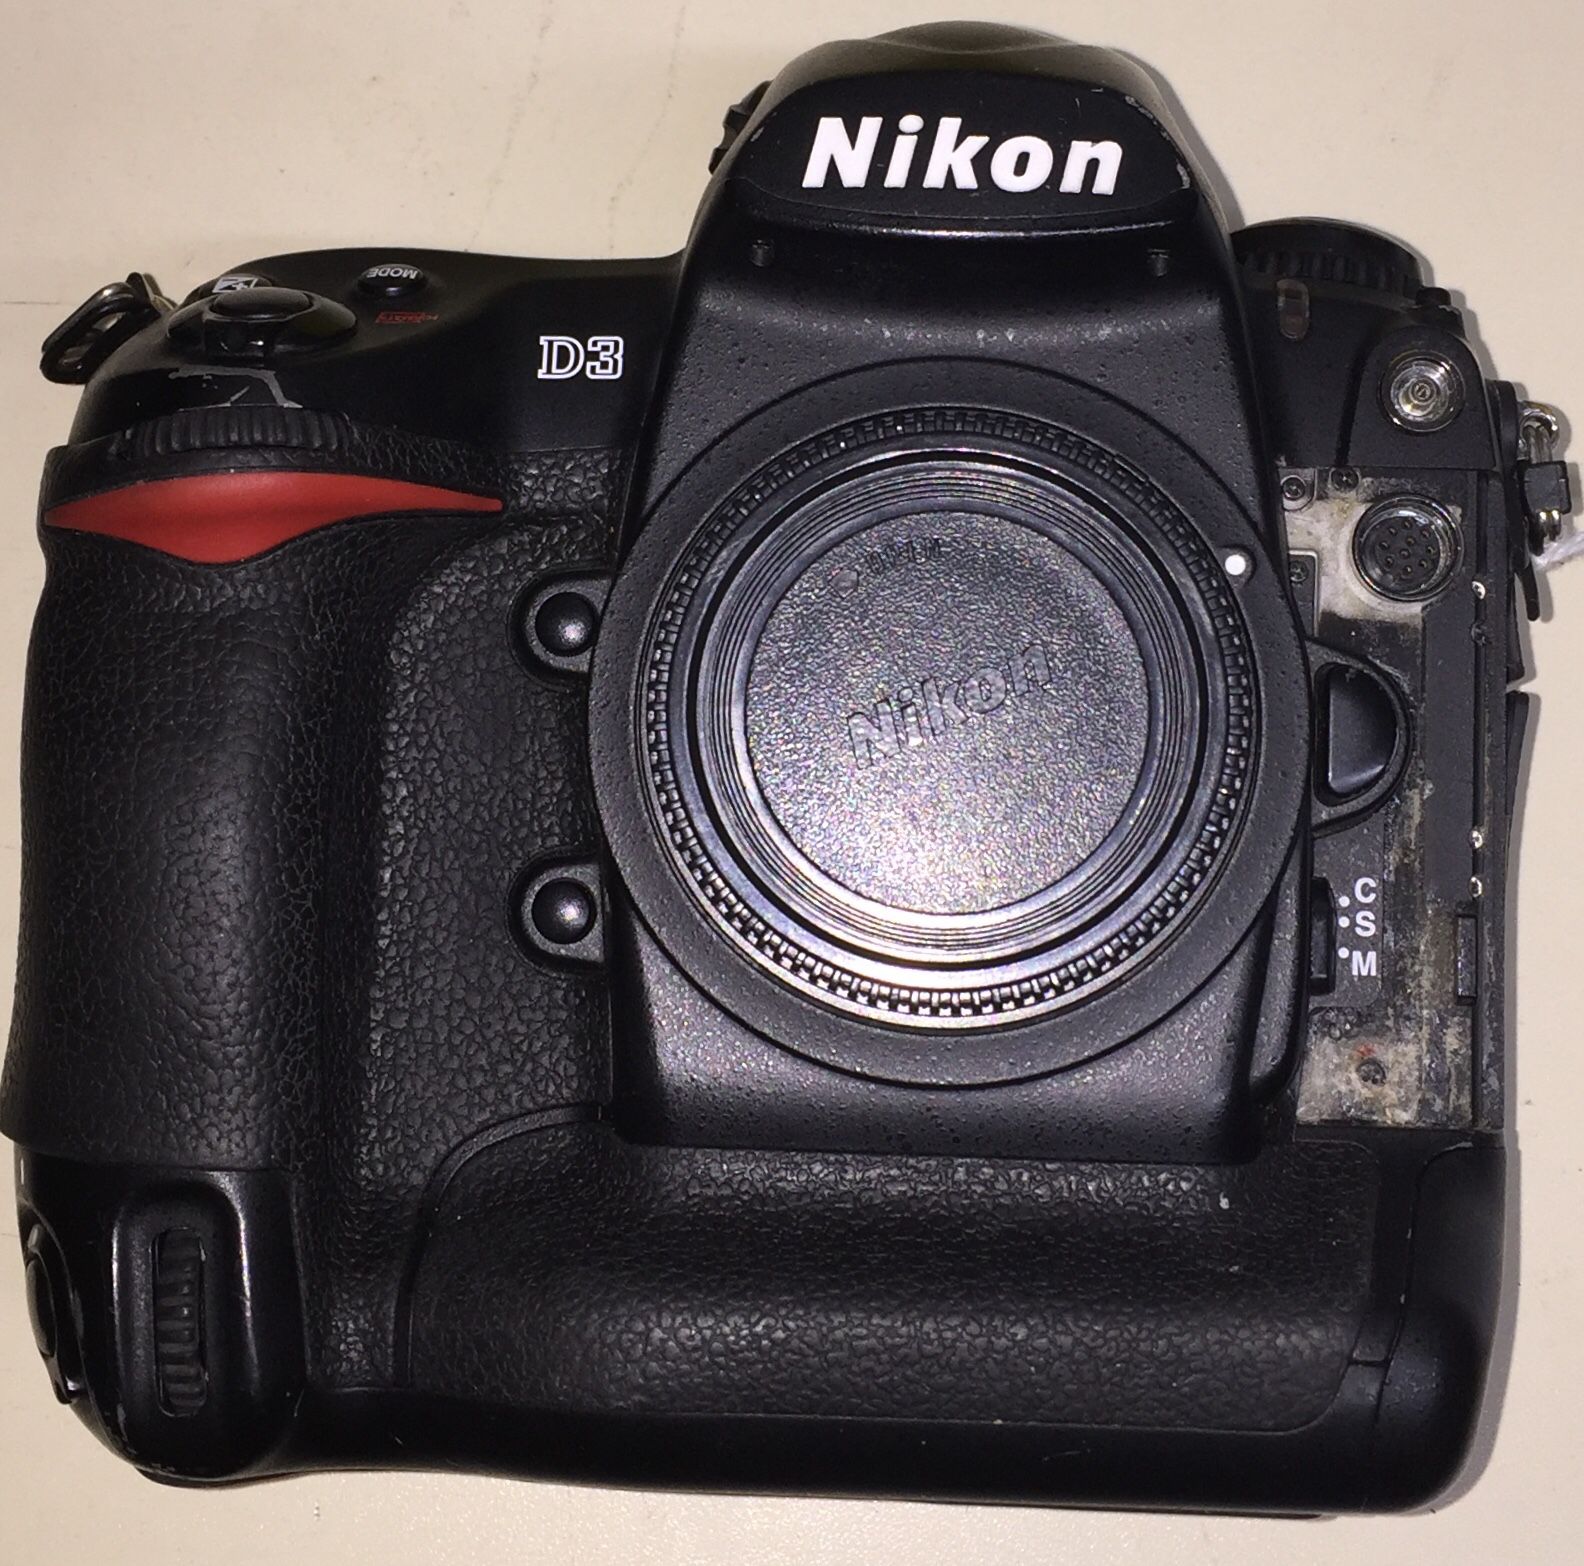 Nikon D3 DSLR camera body only